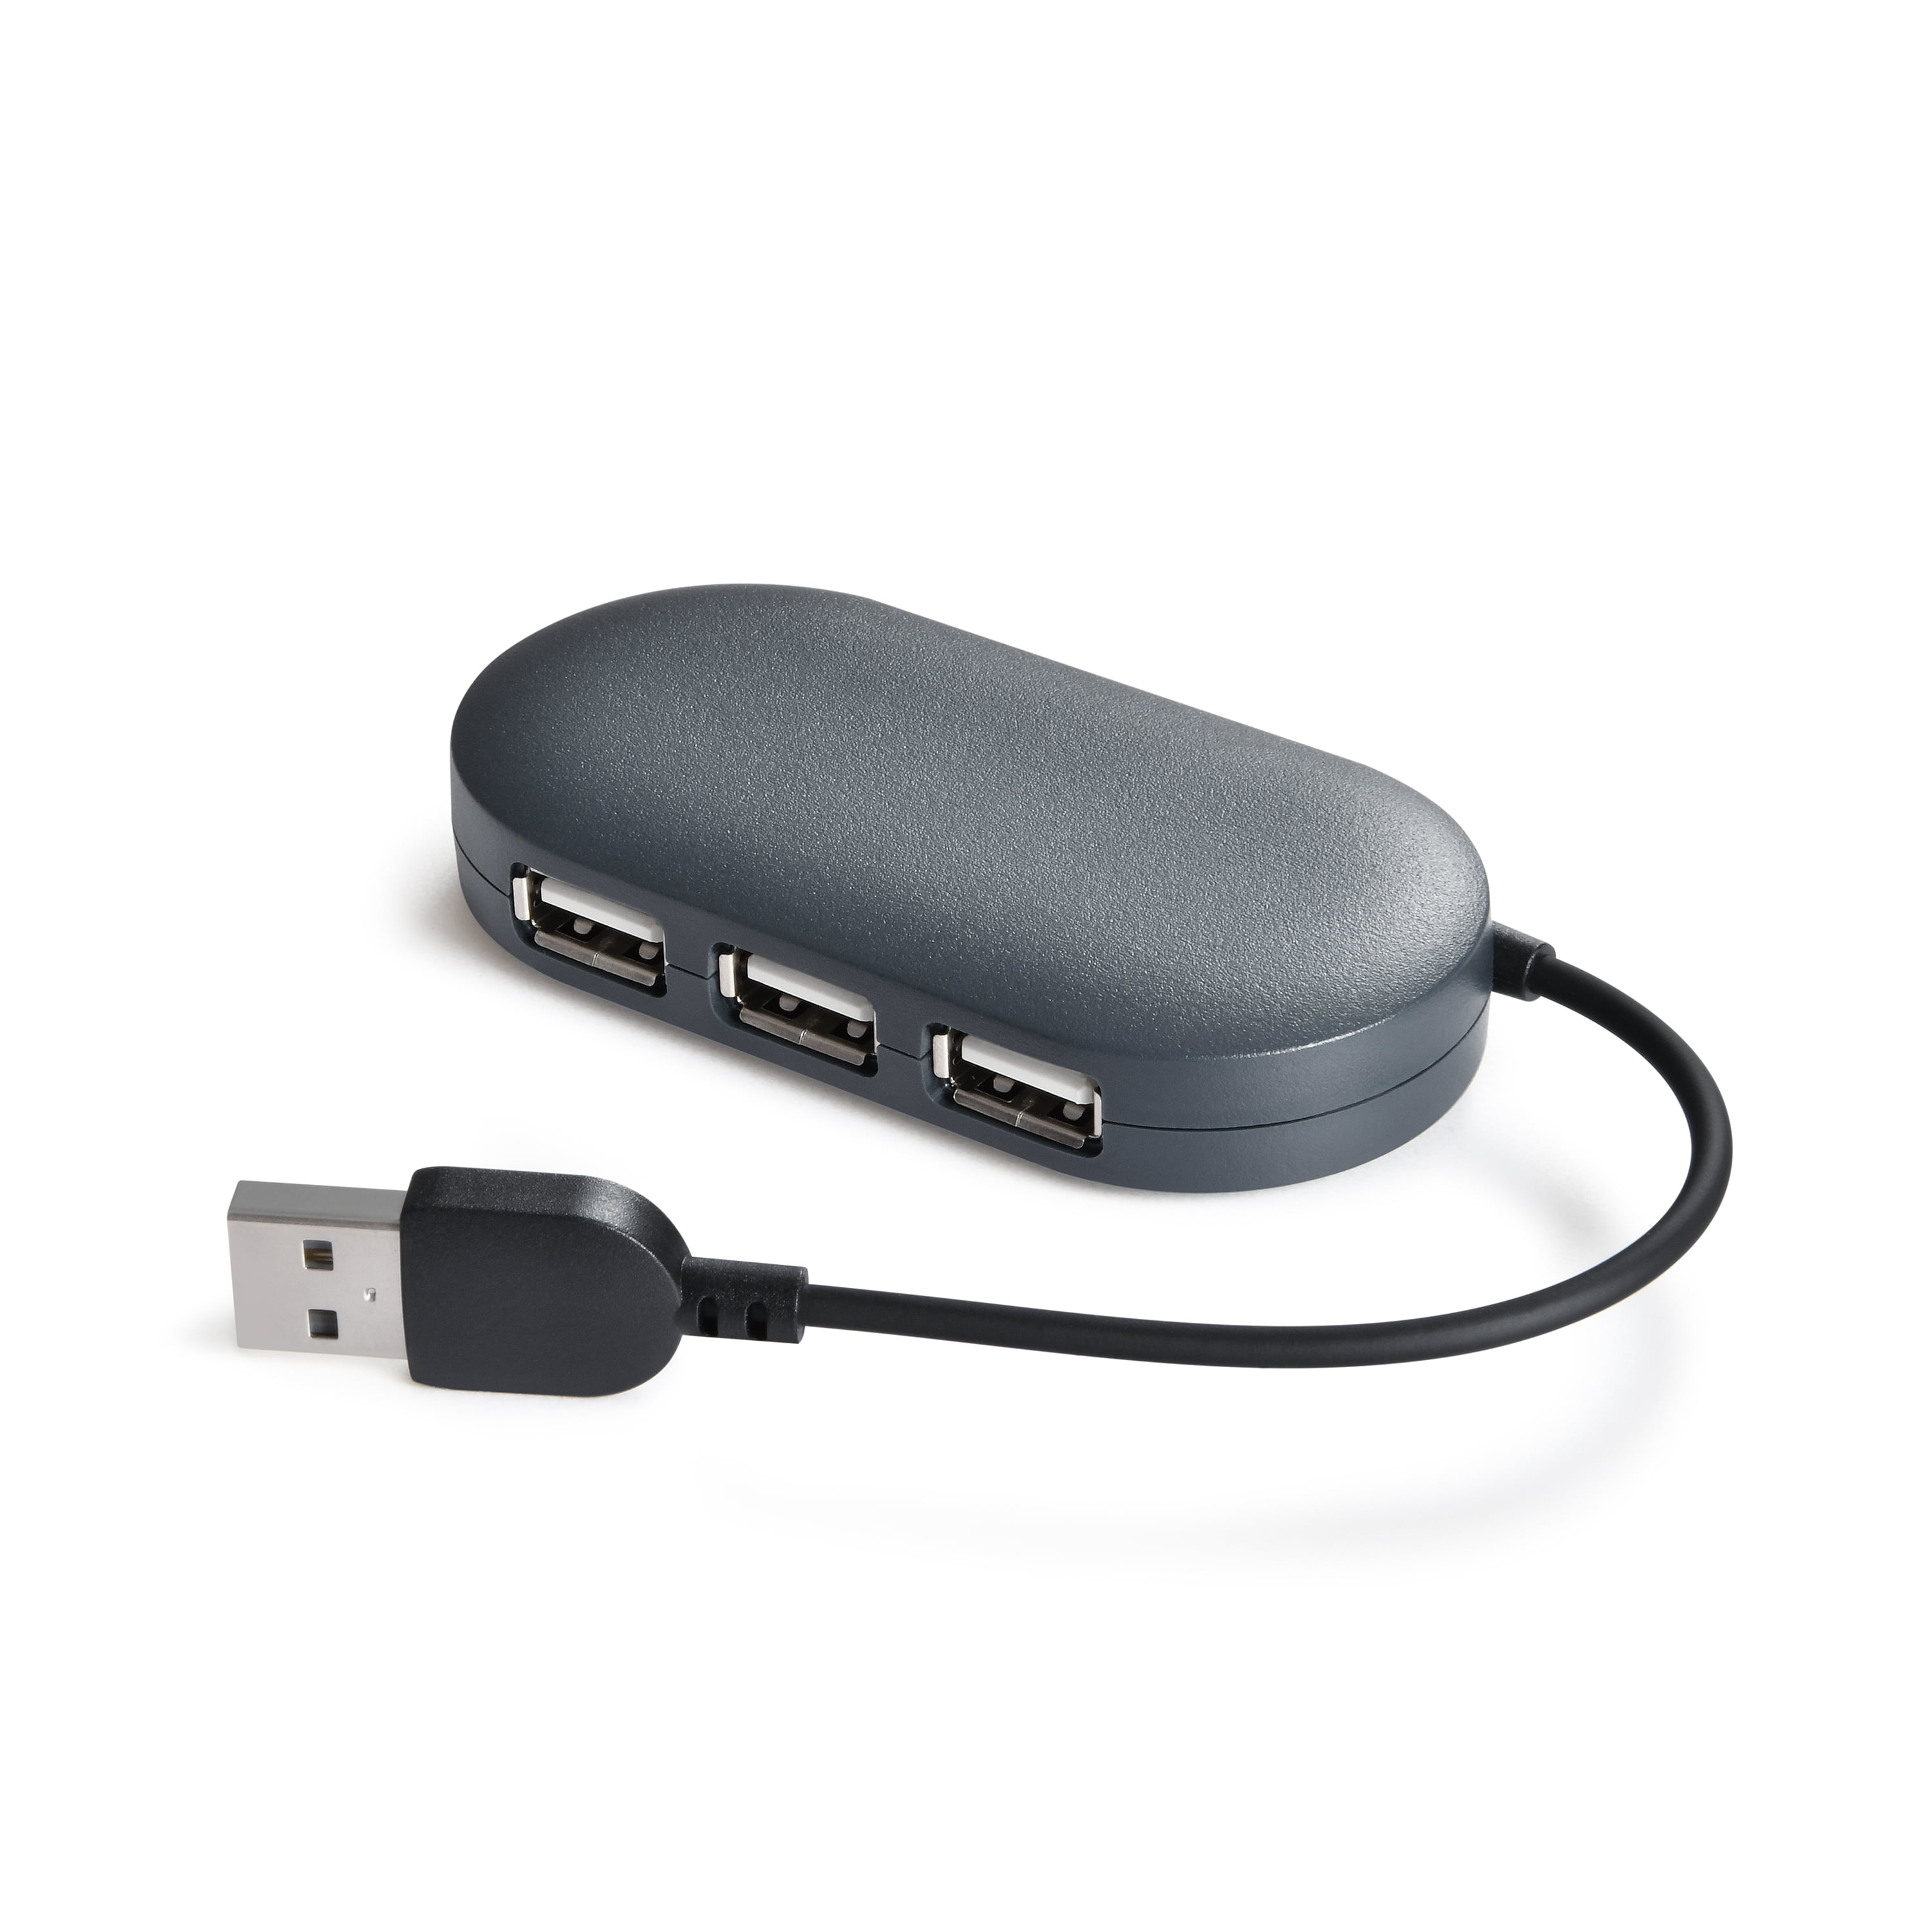 pinion chauffør barriere onn. Portable 4-Port USB Hub with USB 2.0 Ports - Walmart.com